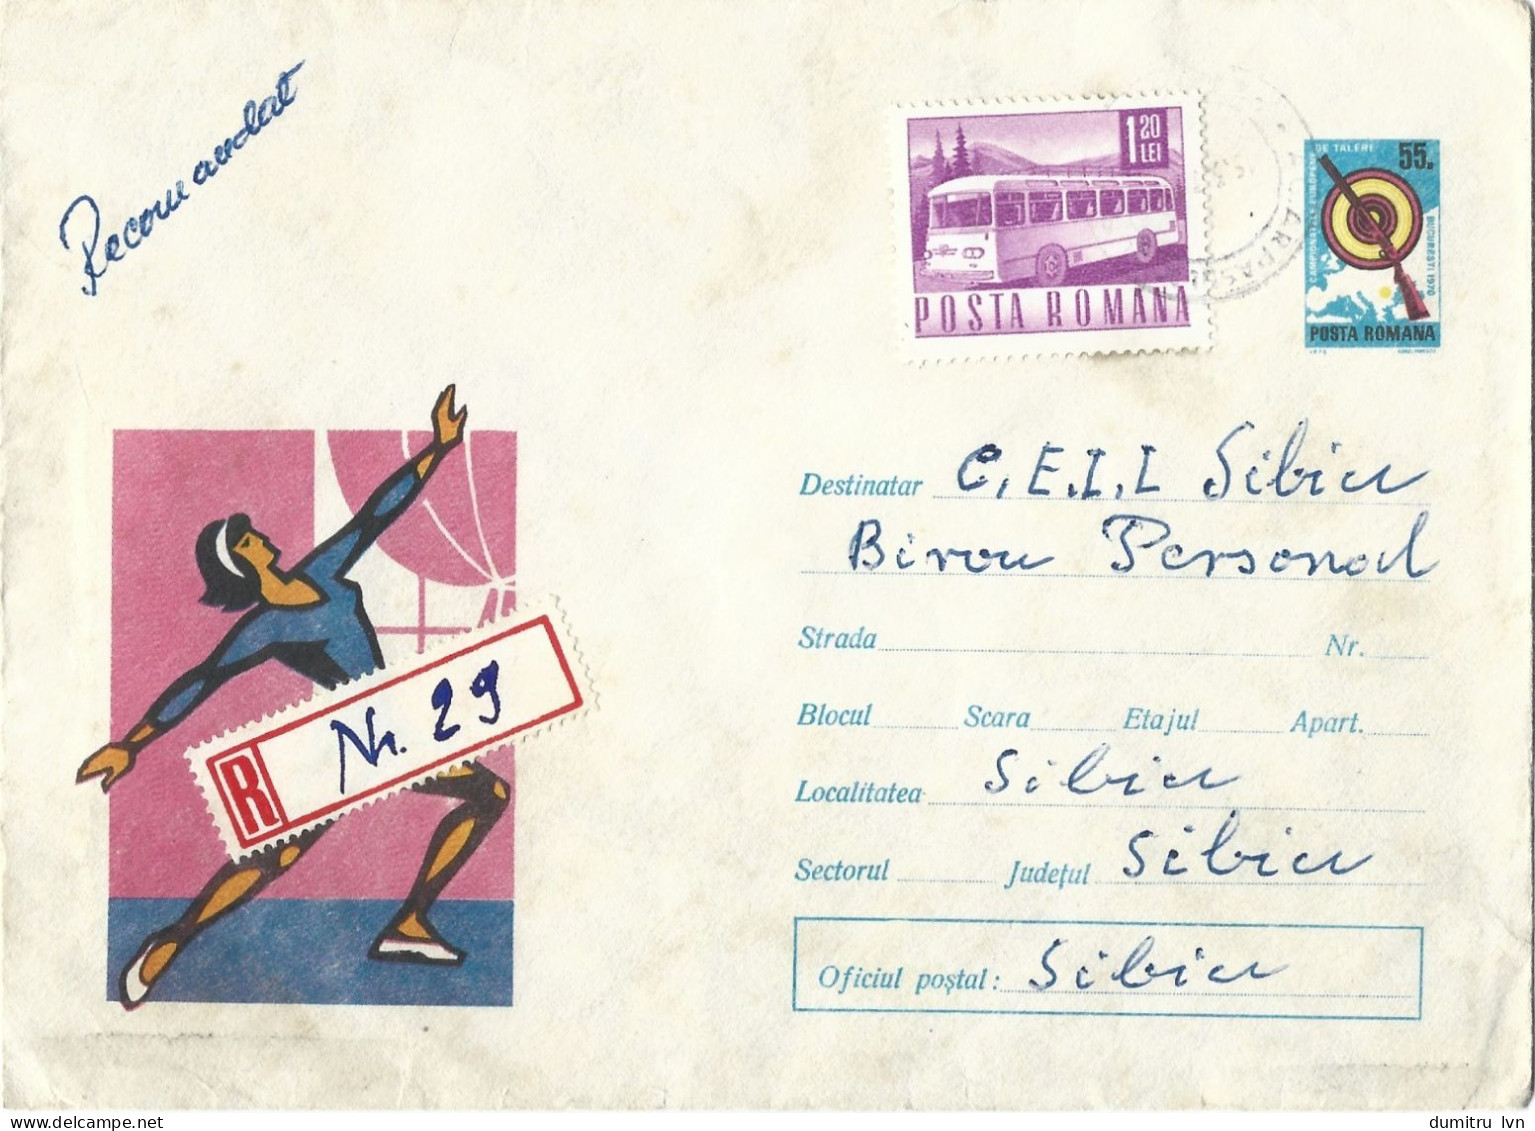 ROMANIA 1970 GYMNASTICS, CIRCULATED ENVELOPE, COVER STATIONERY - Postal Stationery